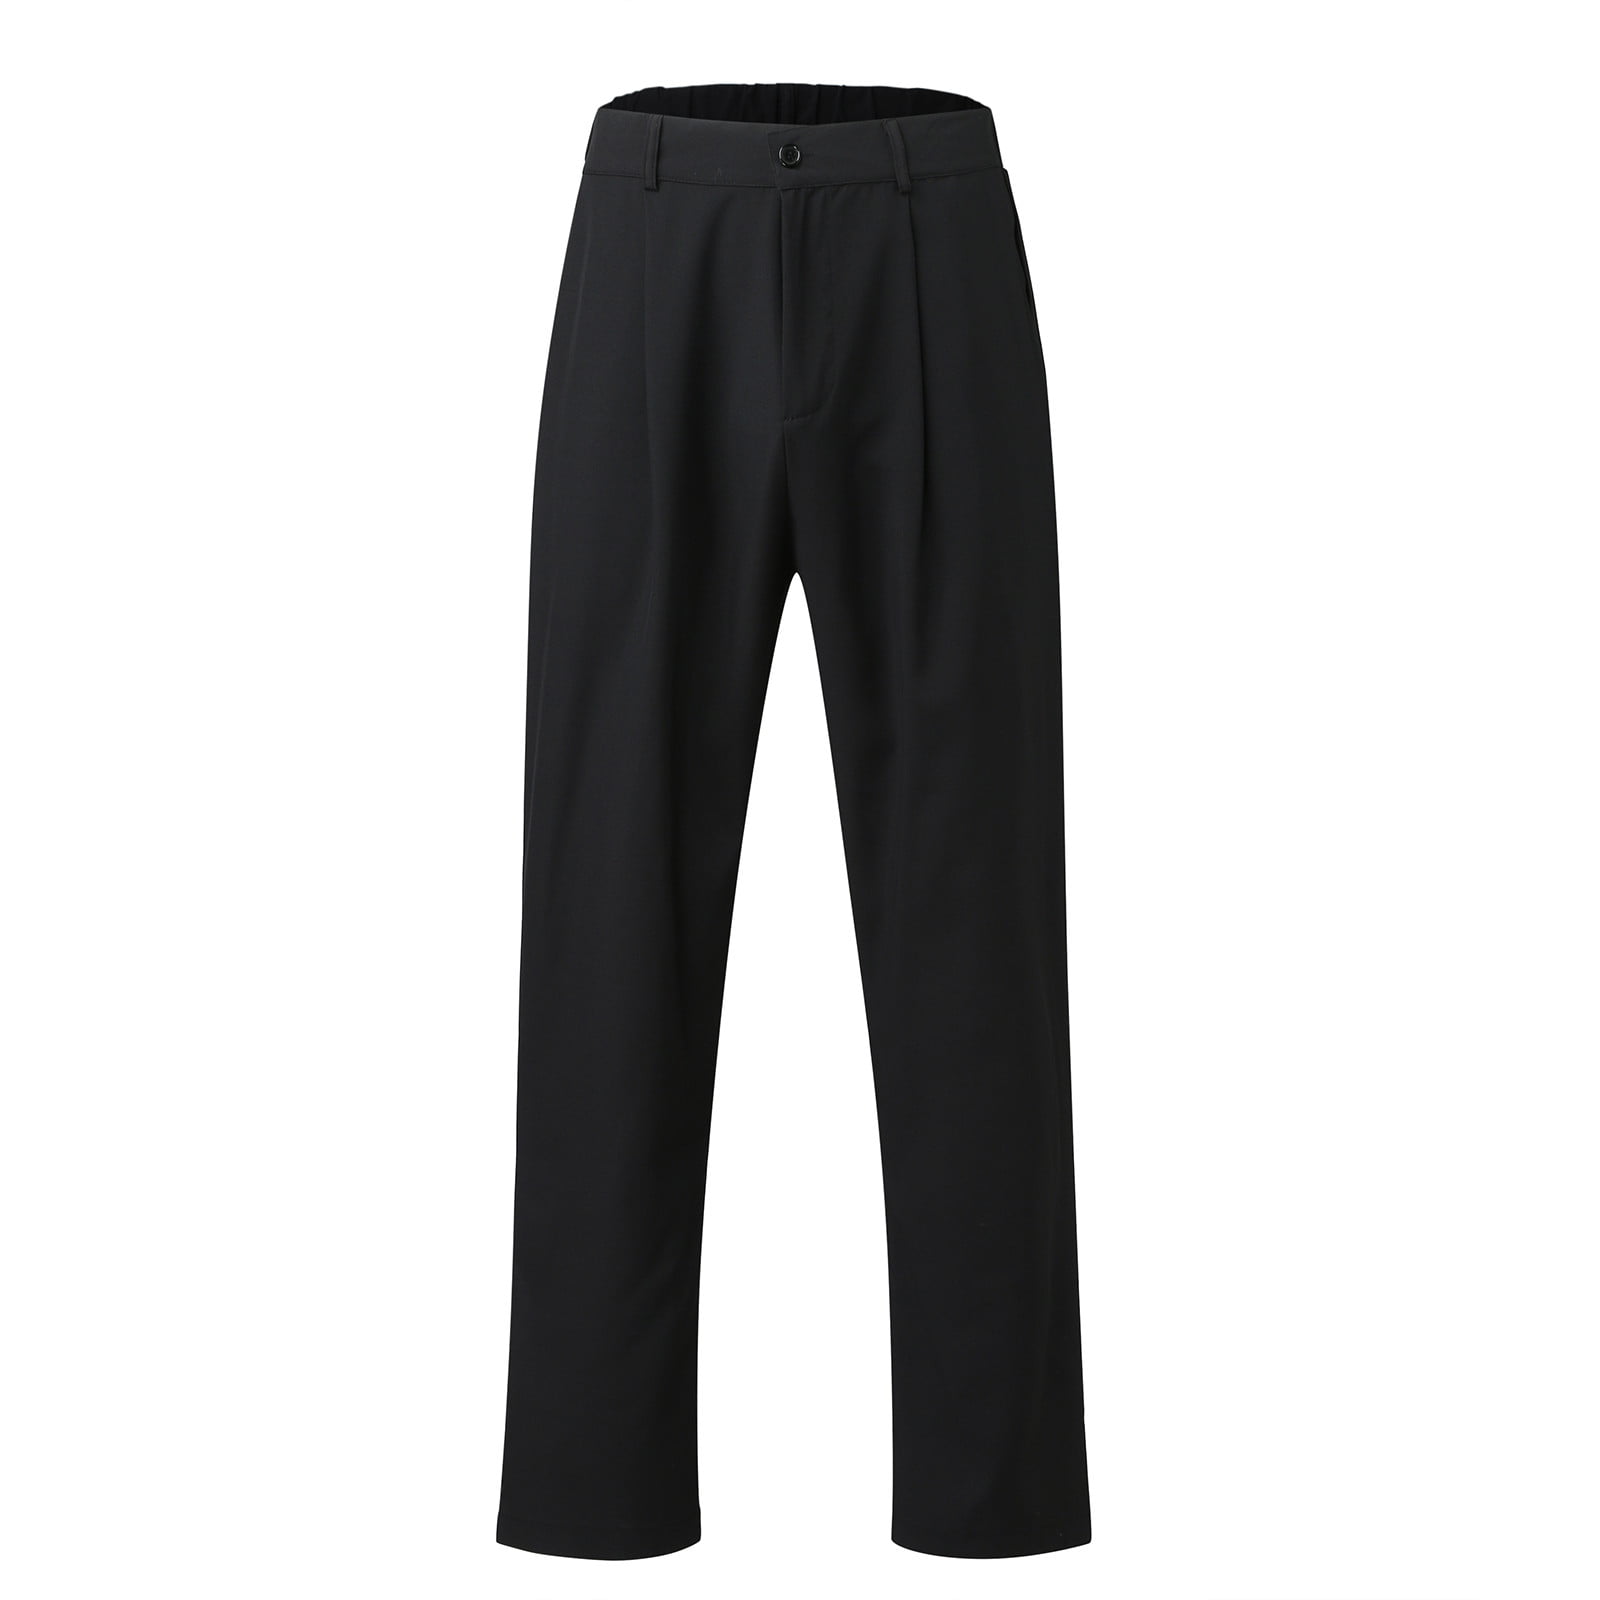 KaLI_store Work Pants for Men Menâ€˜s Joggers Sweatpants - Fashion Cargo  Pants Gym Track Pants Slim Comfortable Trousers Black,L 